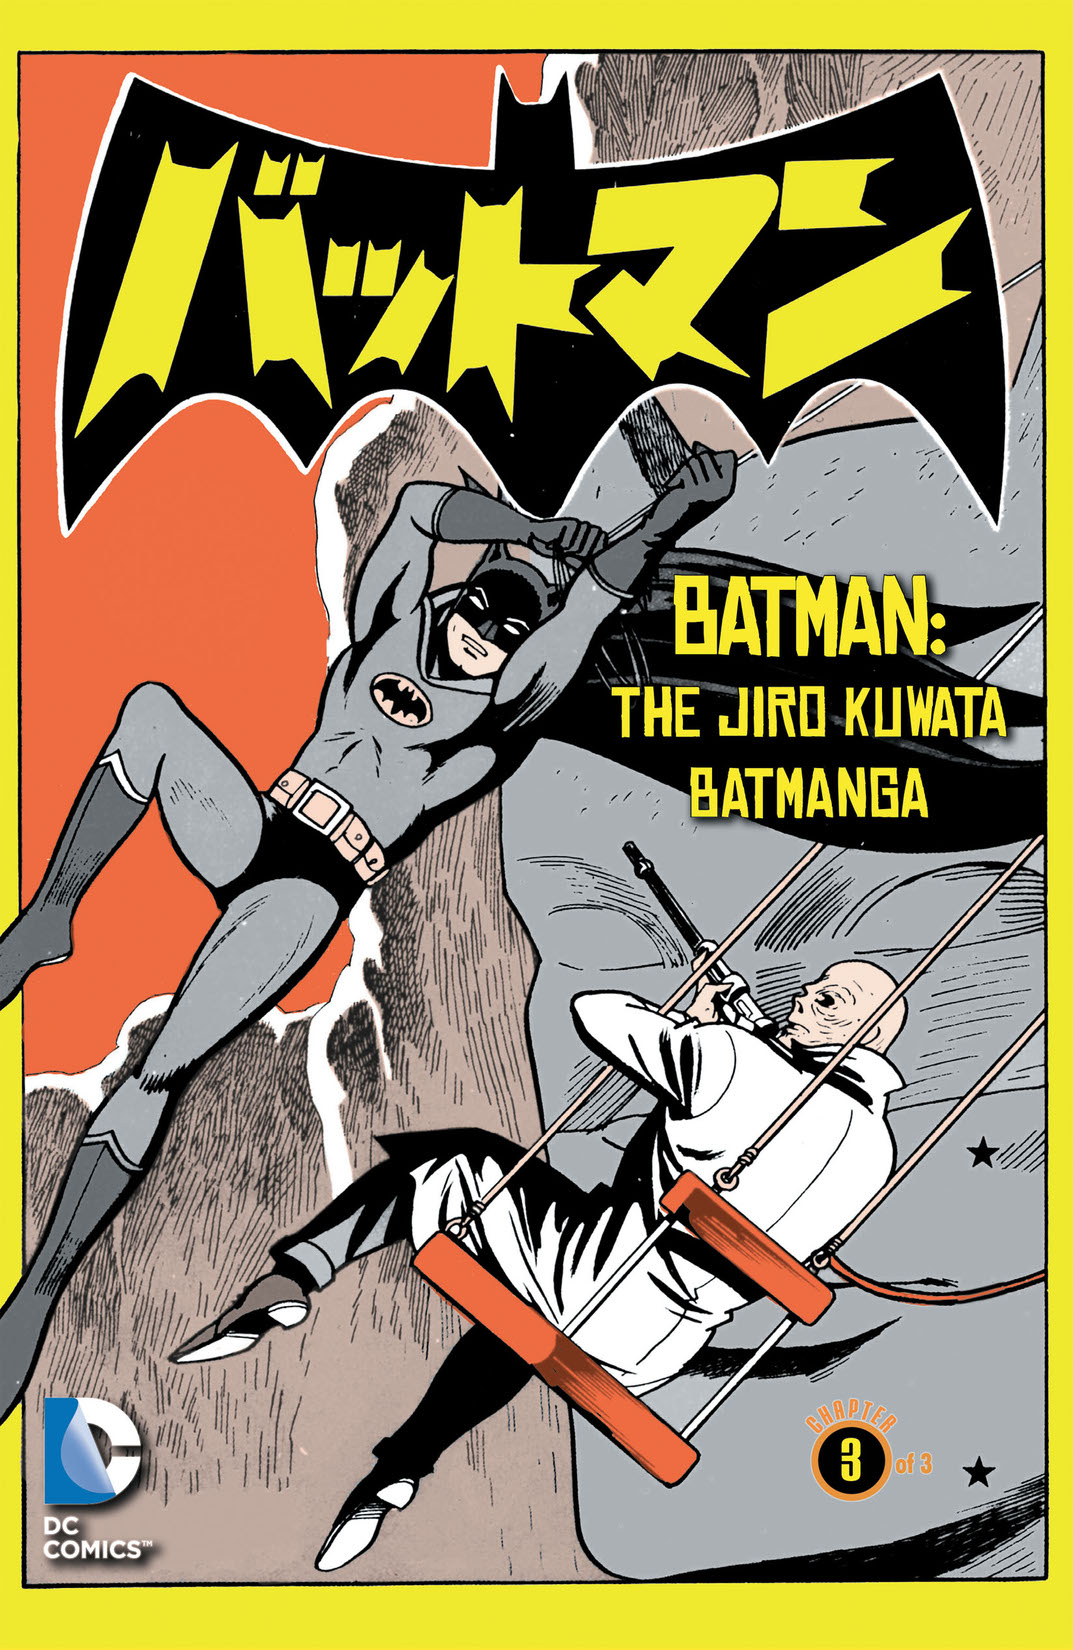 Batman: The Jiro Kuwata Batmanga #6 preview images